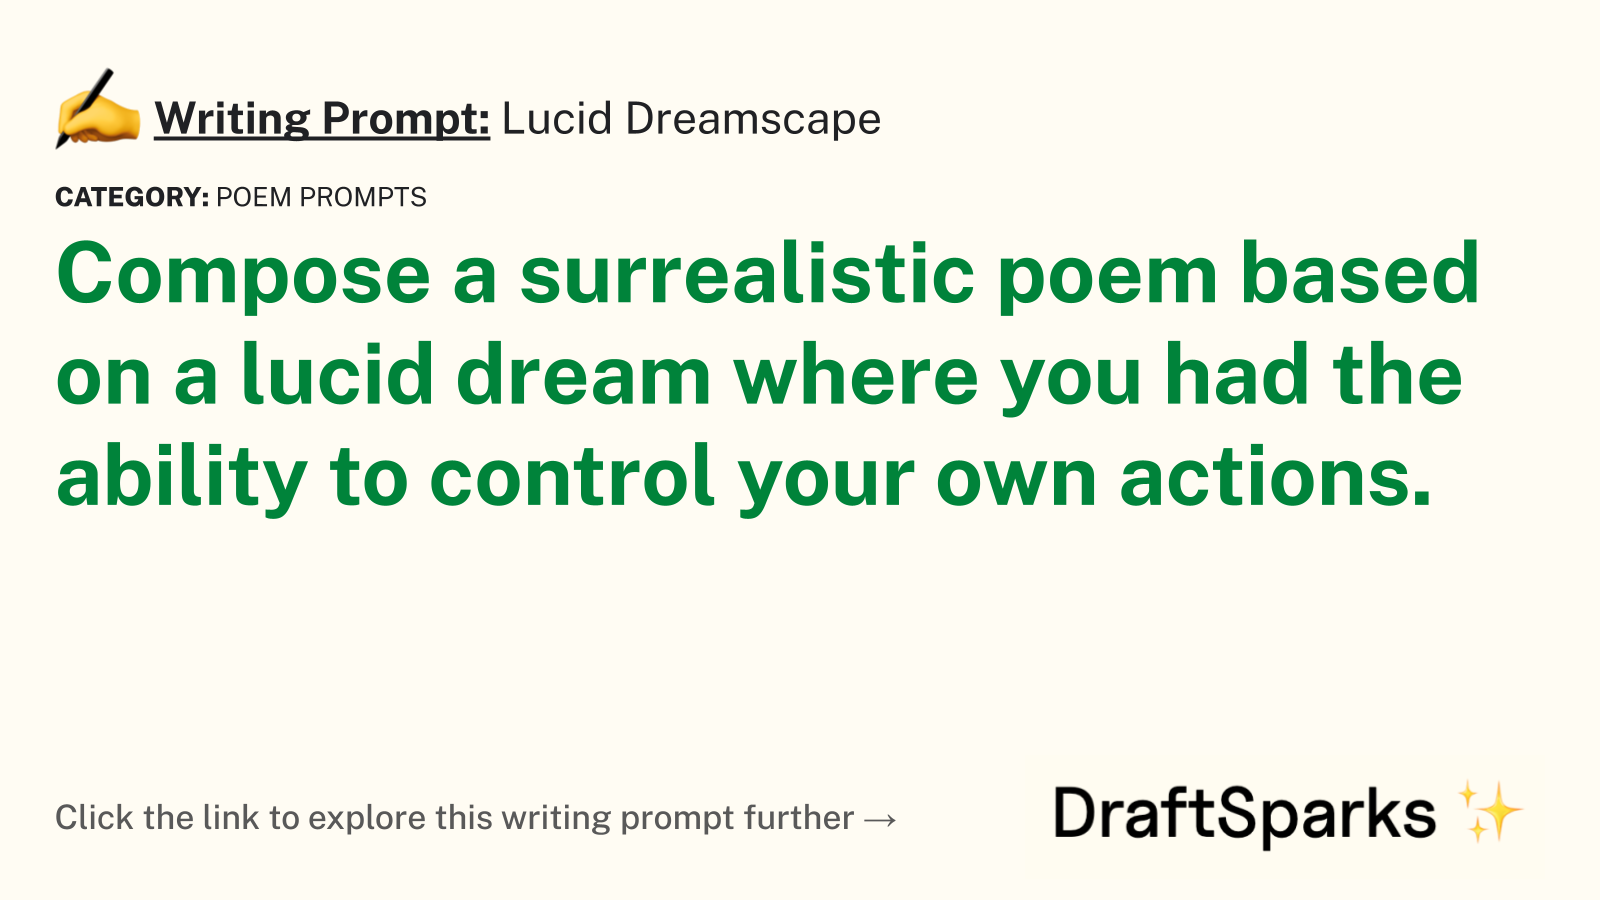 Lucid Dreamscape